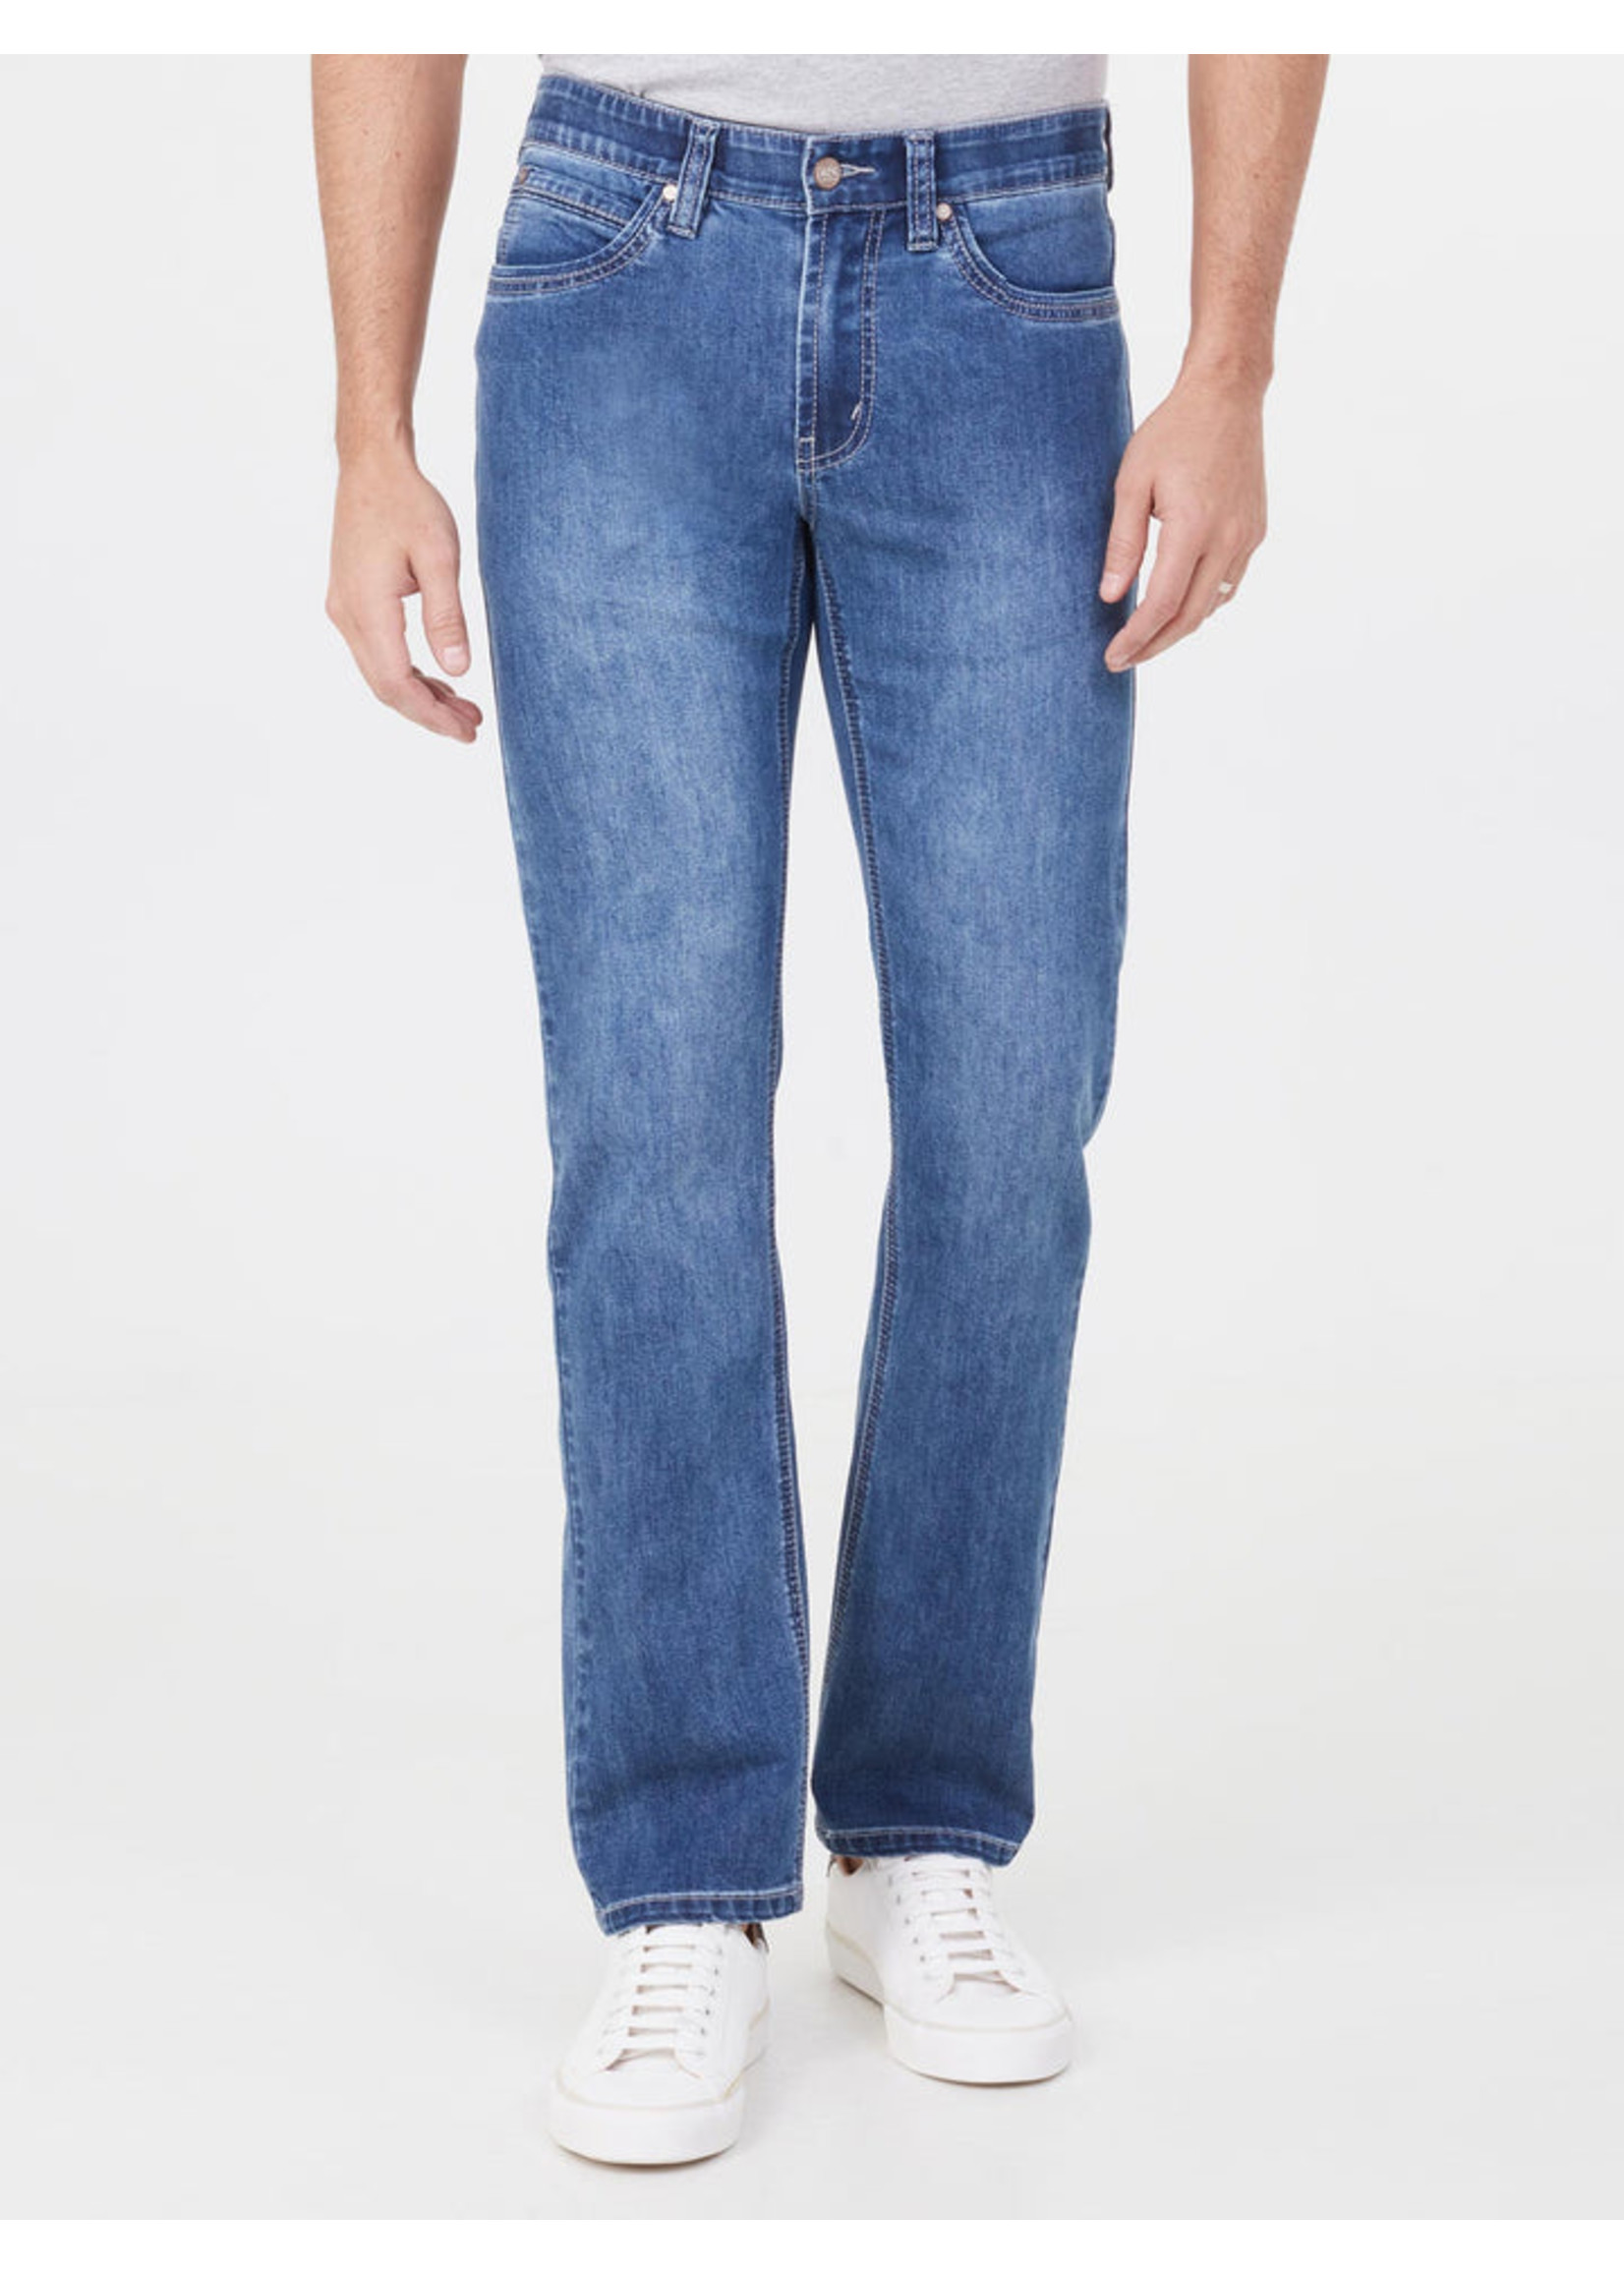 LOIS JEANS & JACKETS Jeans extensible coupe Peter slim-Homme